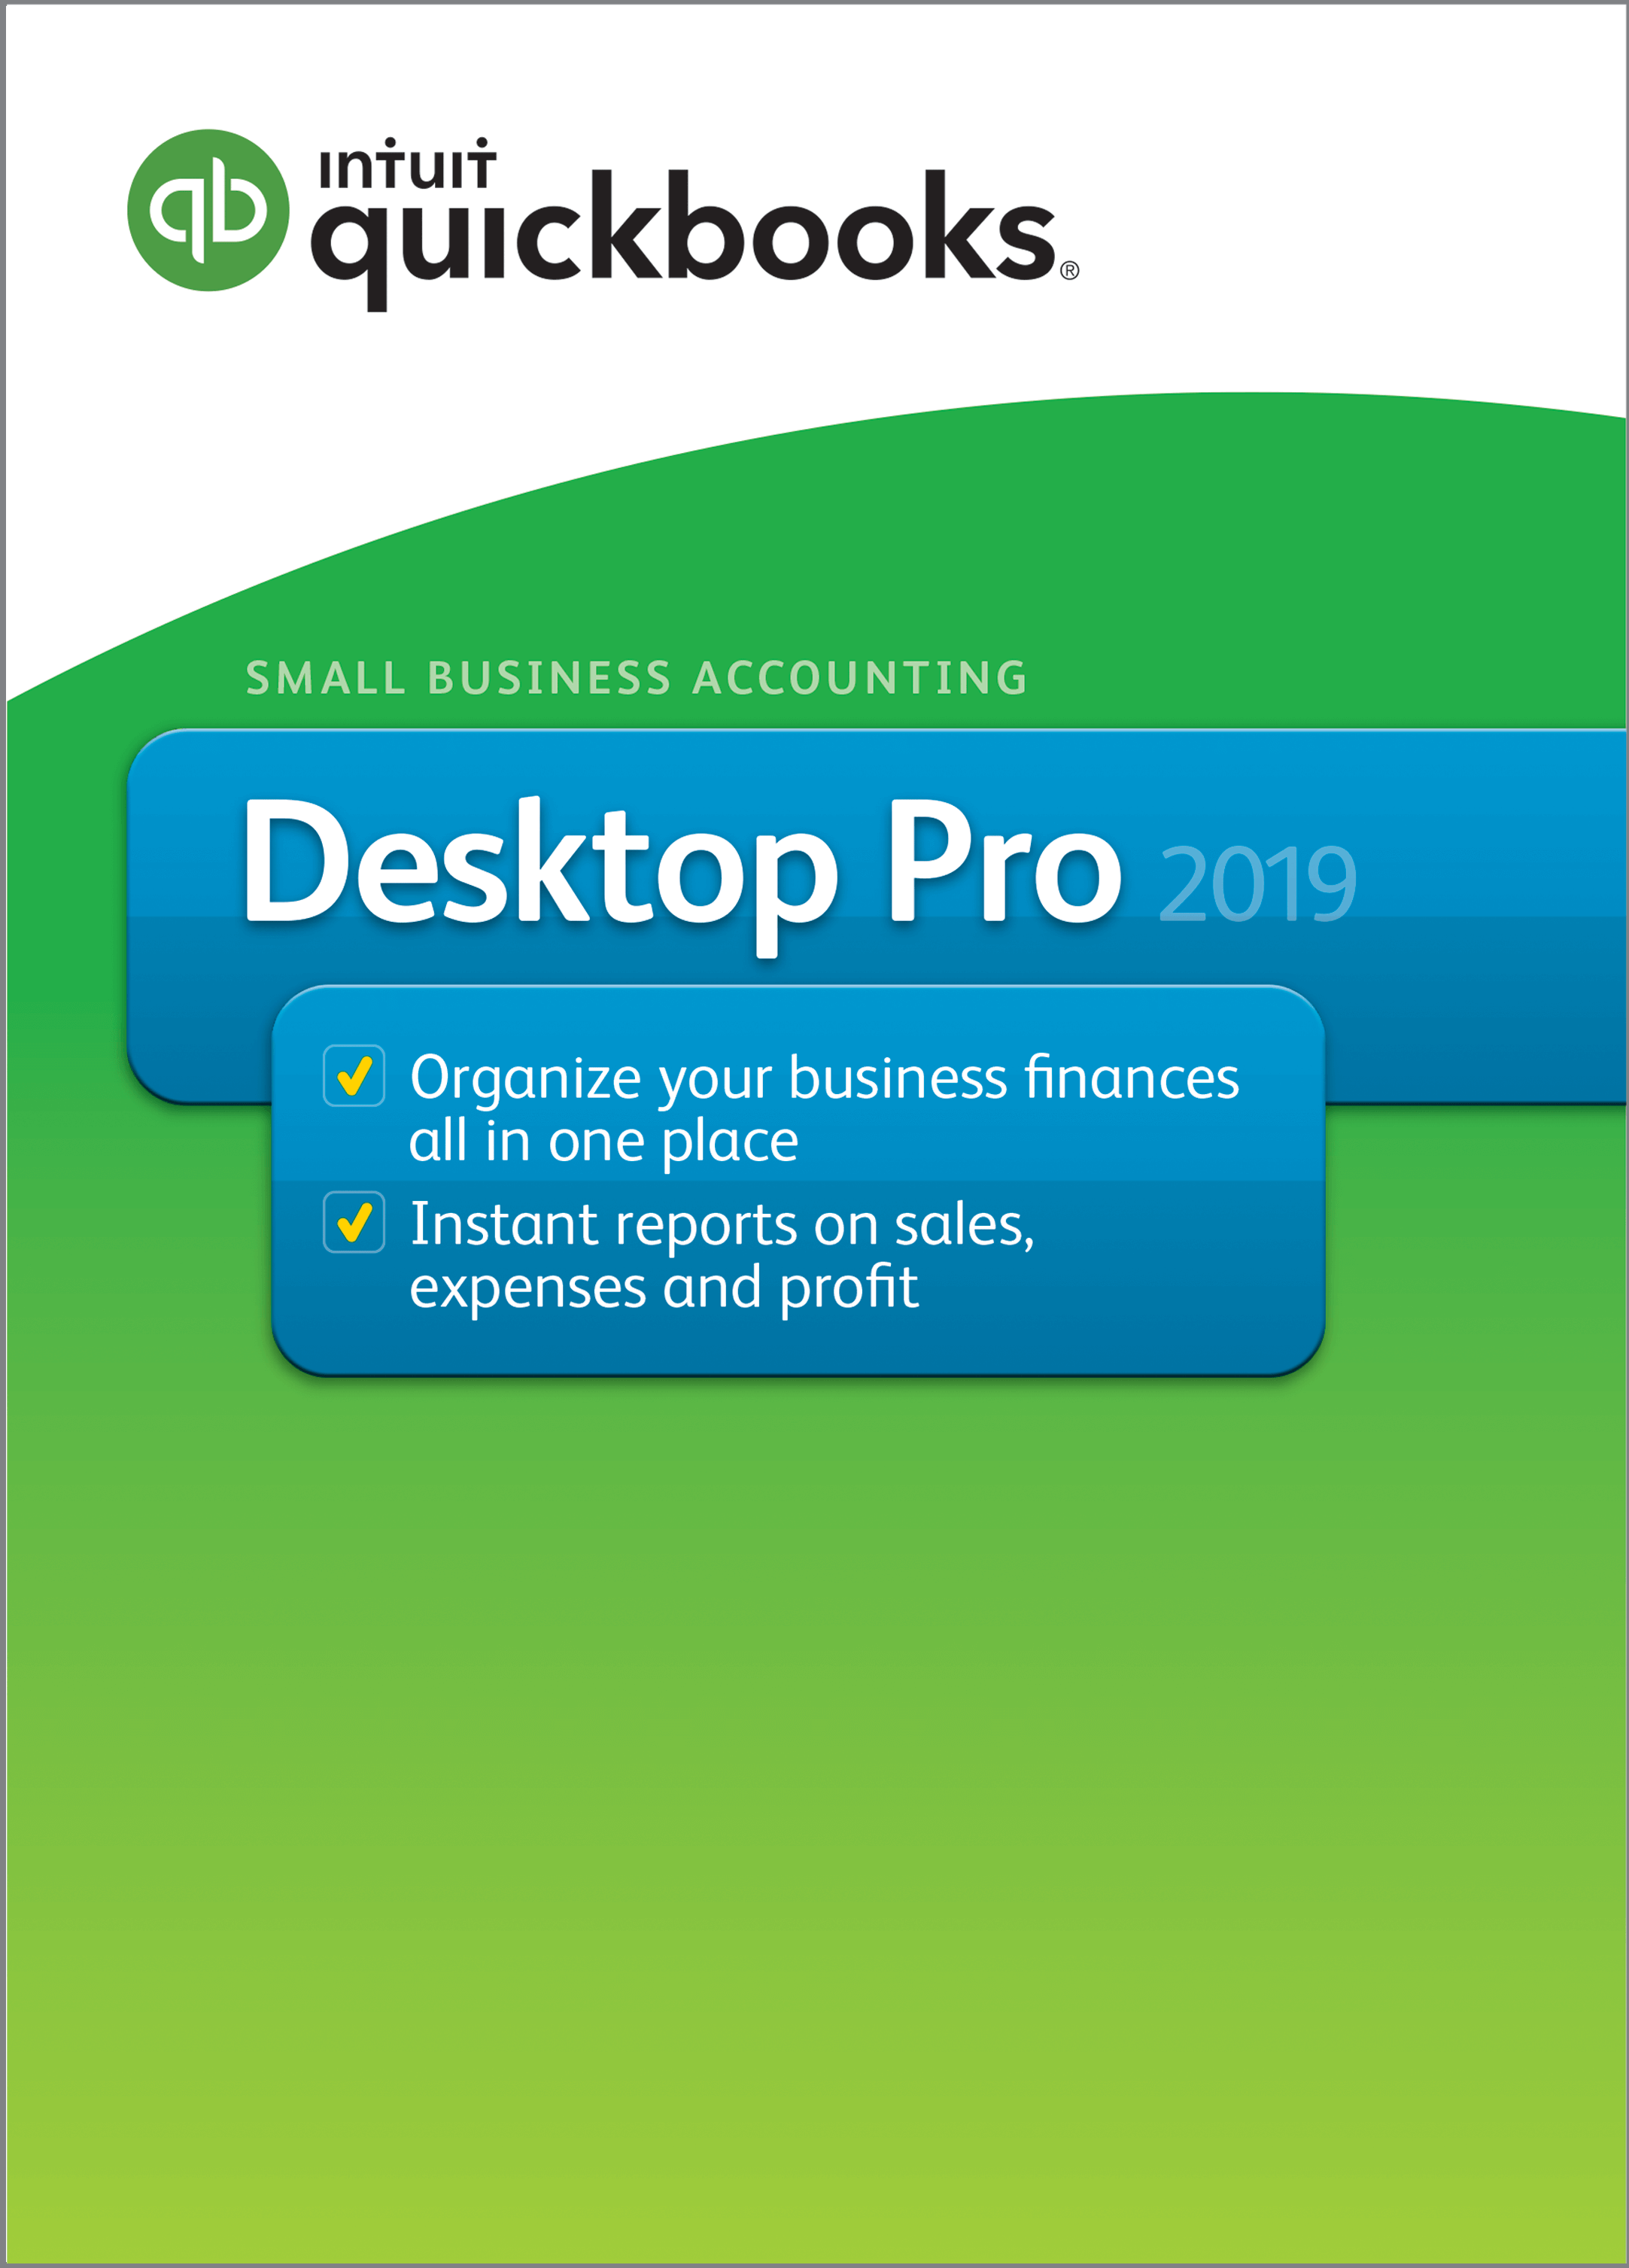 quickbooks desktop pro 2019 for mac